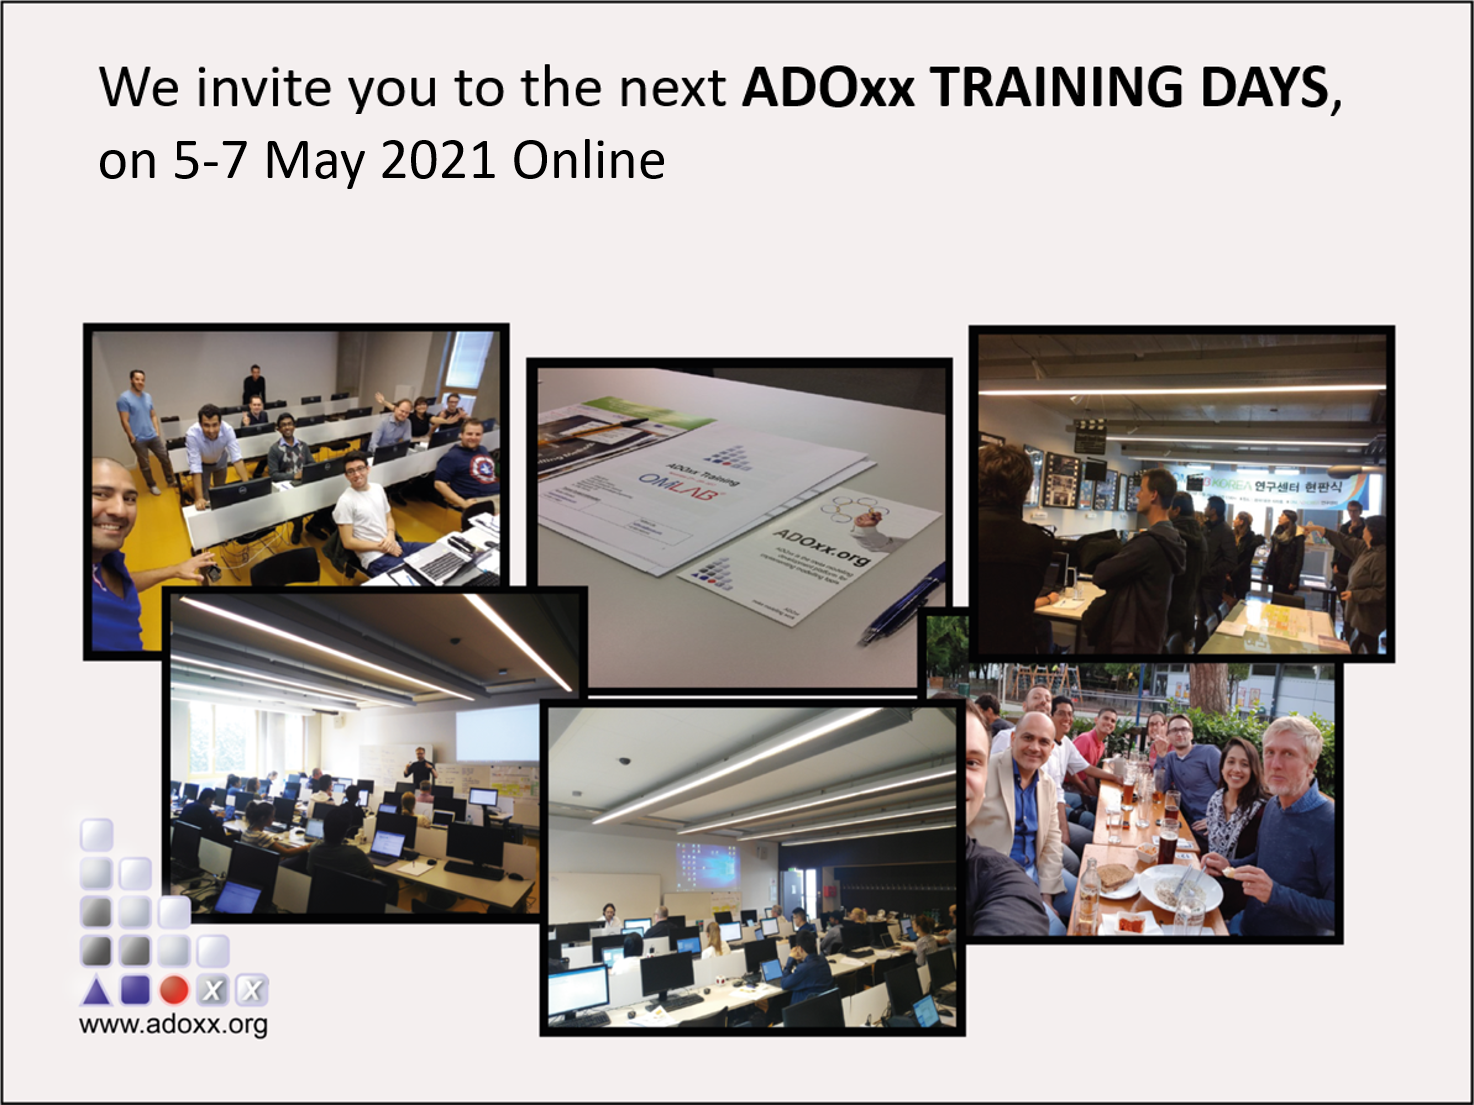 ADOxx Training